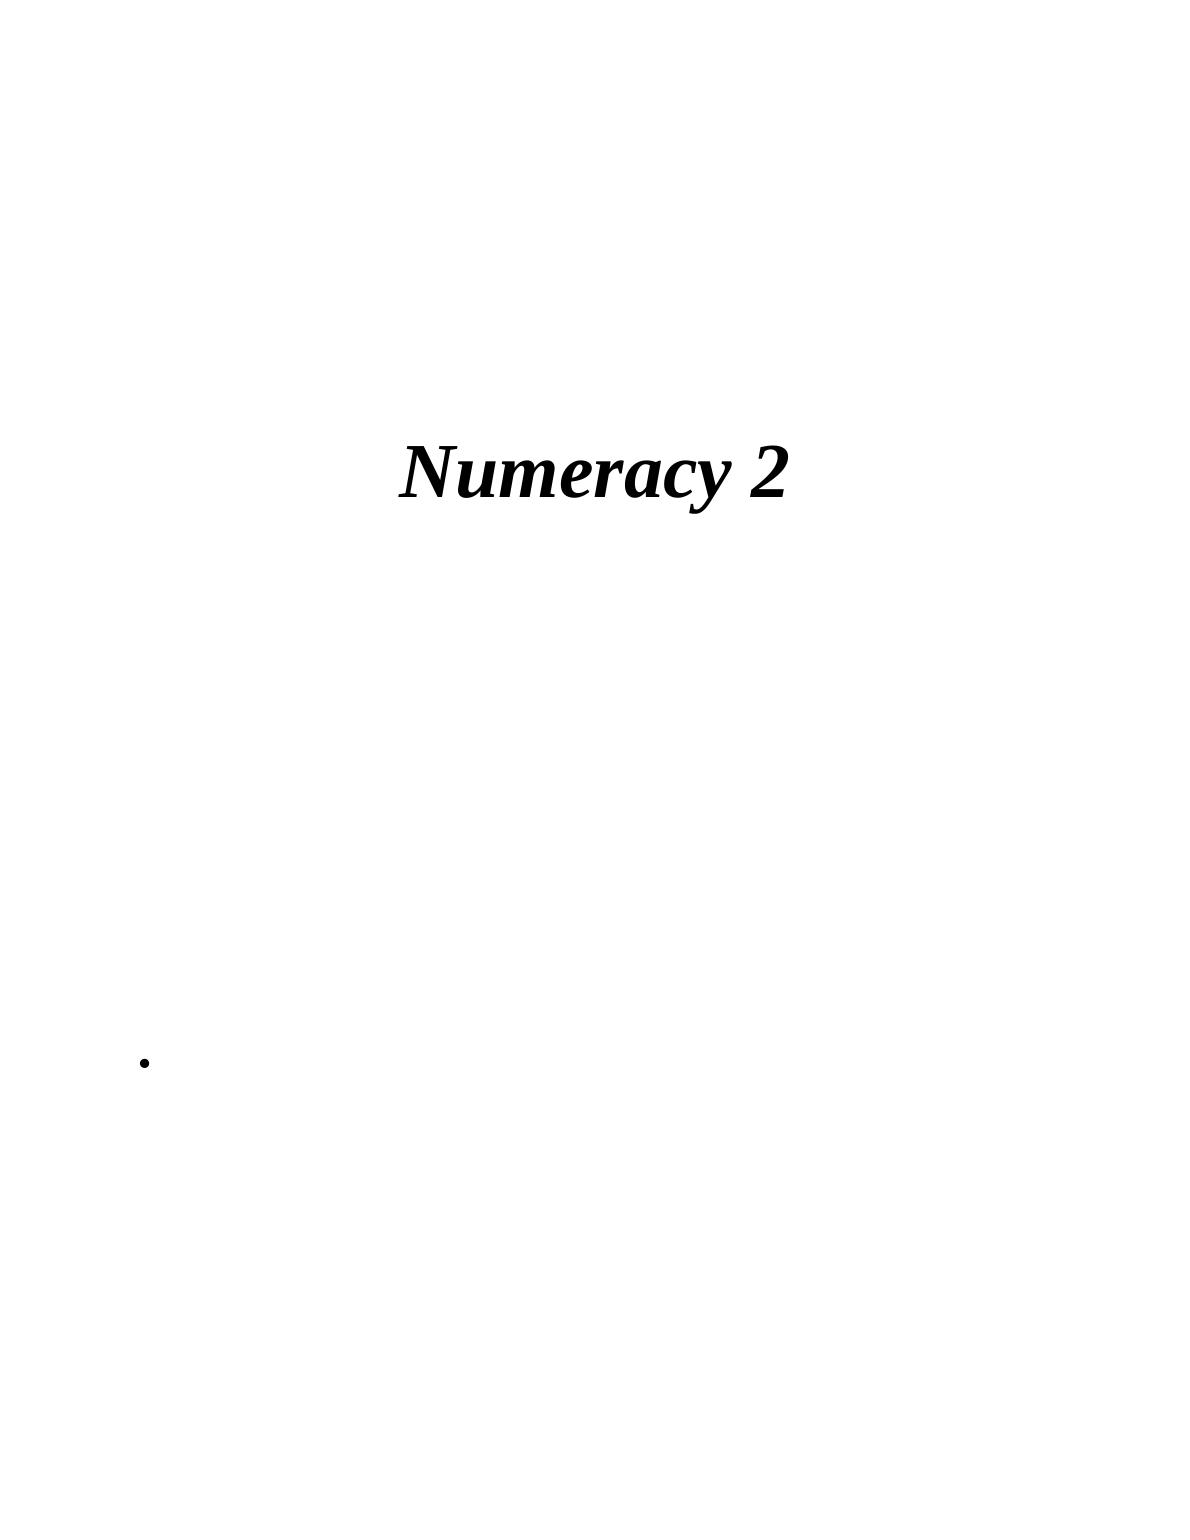 Mathematics Assignment: Numeracy Assignment_1